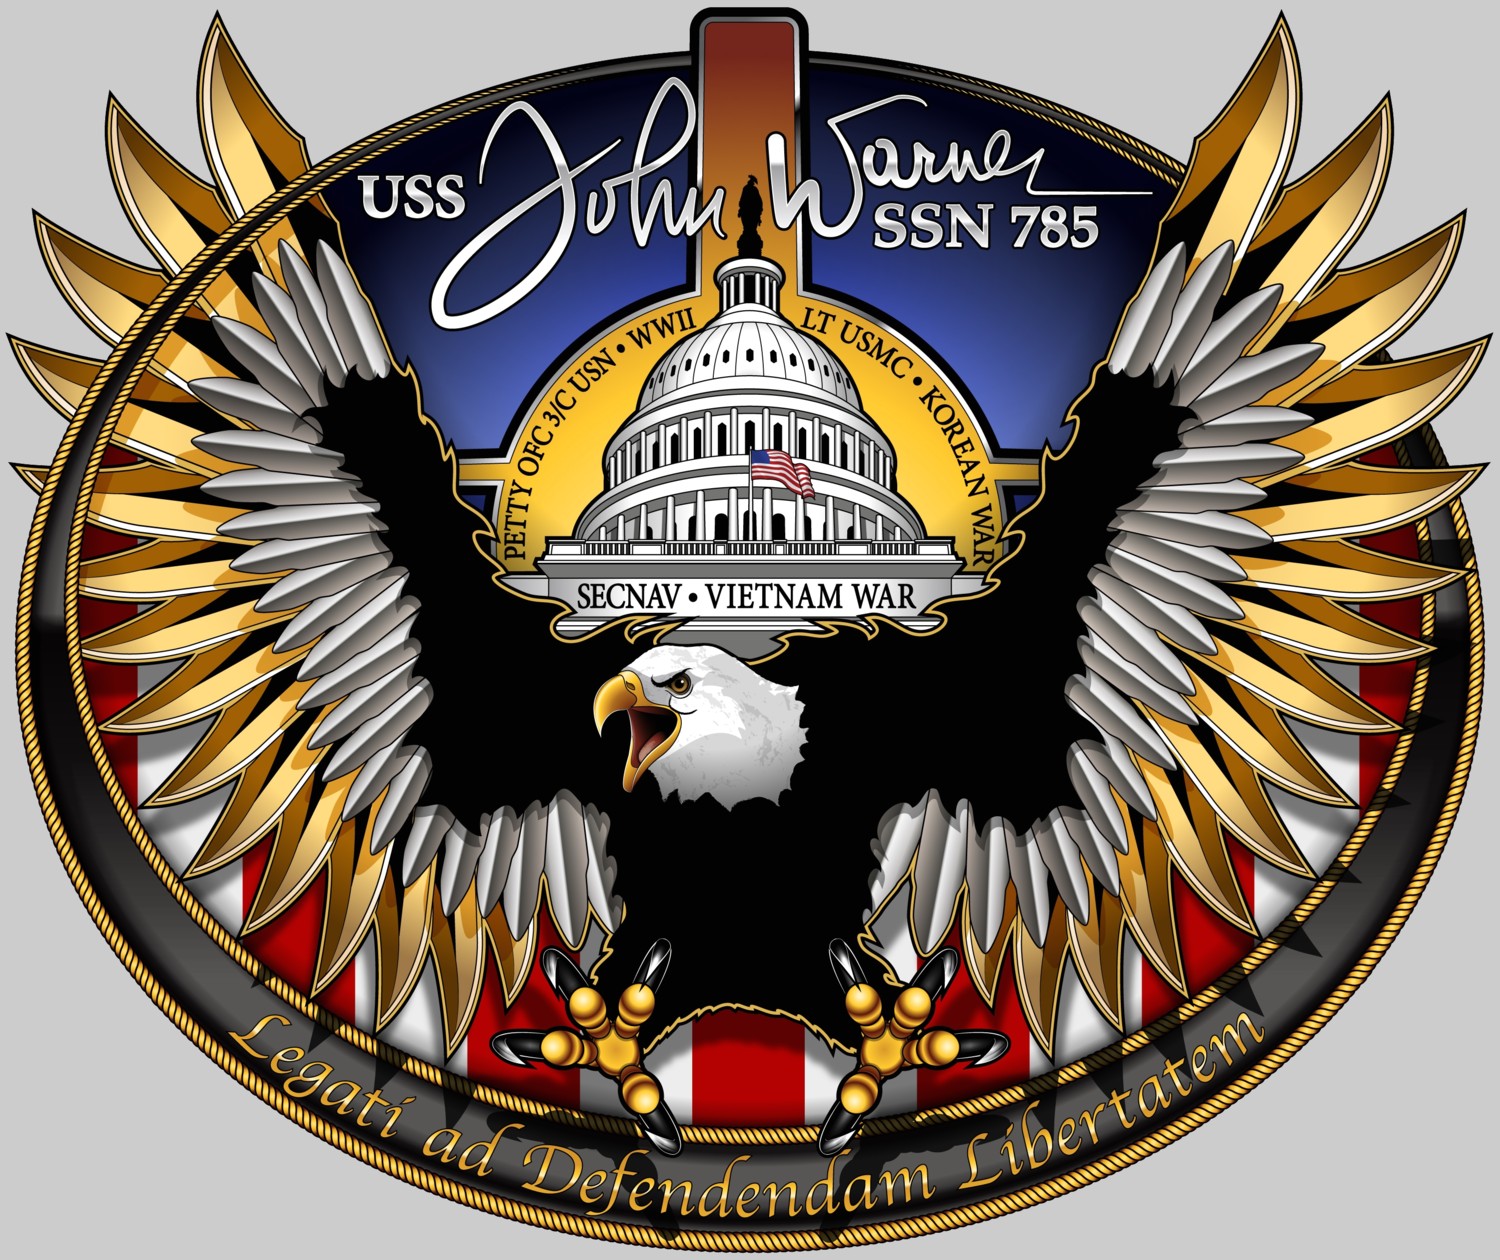 ssn-785 uss john warner insignia crest patch badge virginia class attack submarine us navy 02c